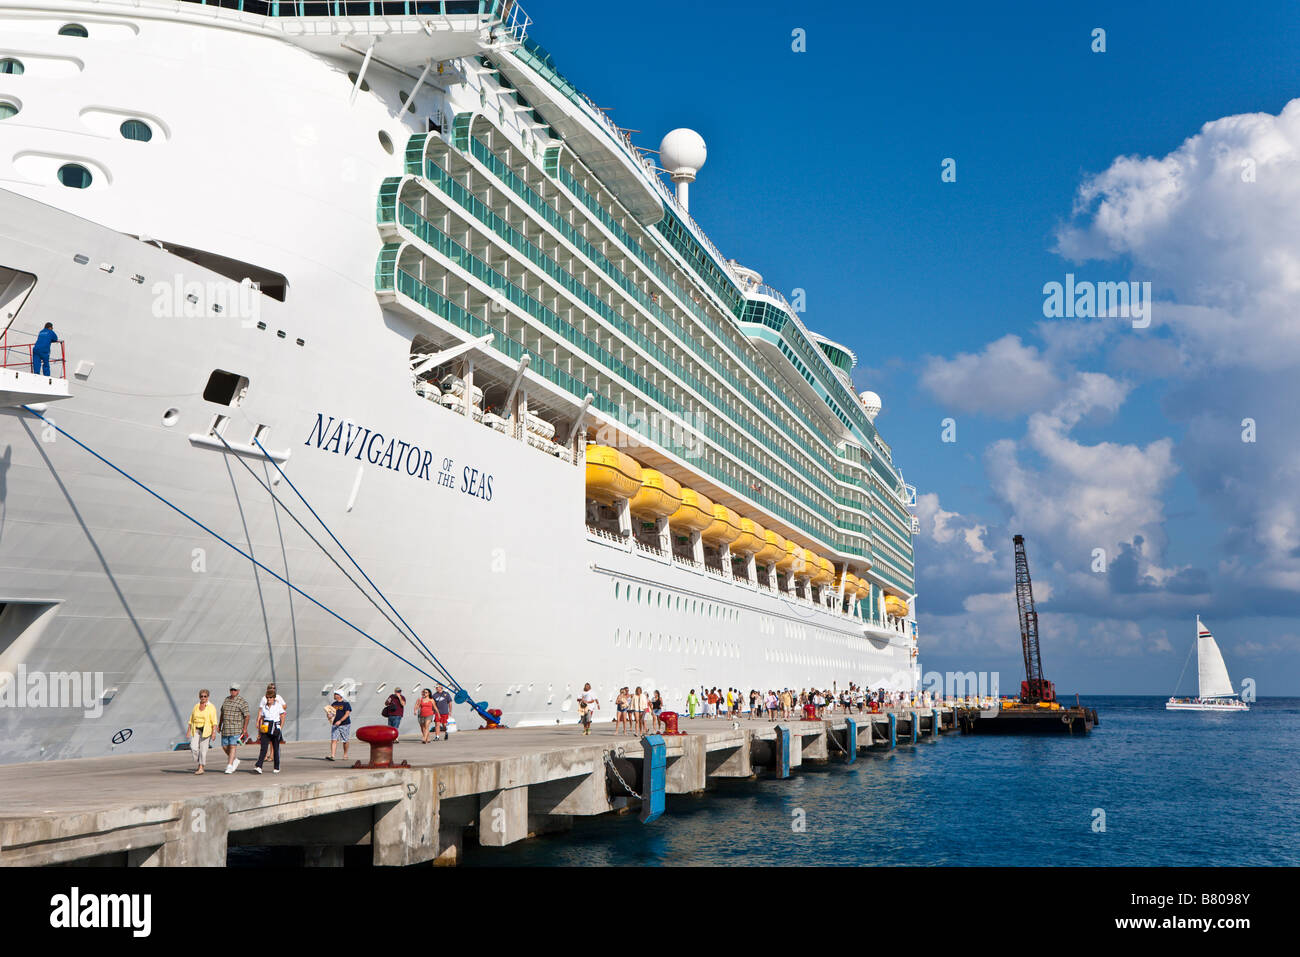 royal-caribbean-navigator-of-the-seas-cruise-passengers-going-ashore-B8098Y.jpg